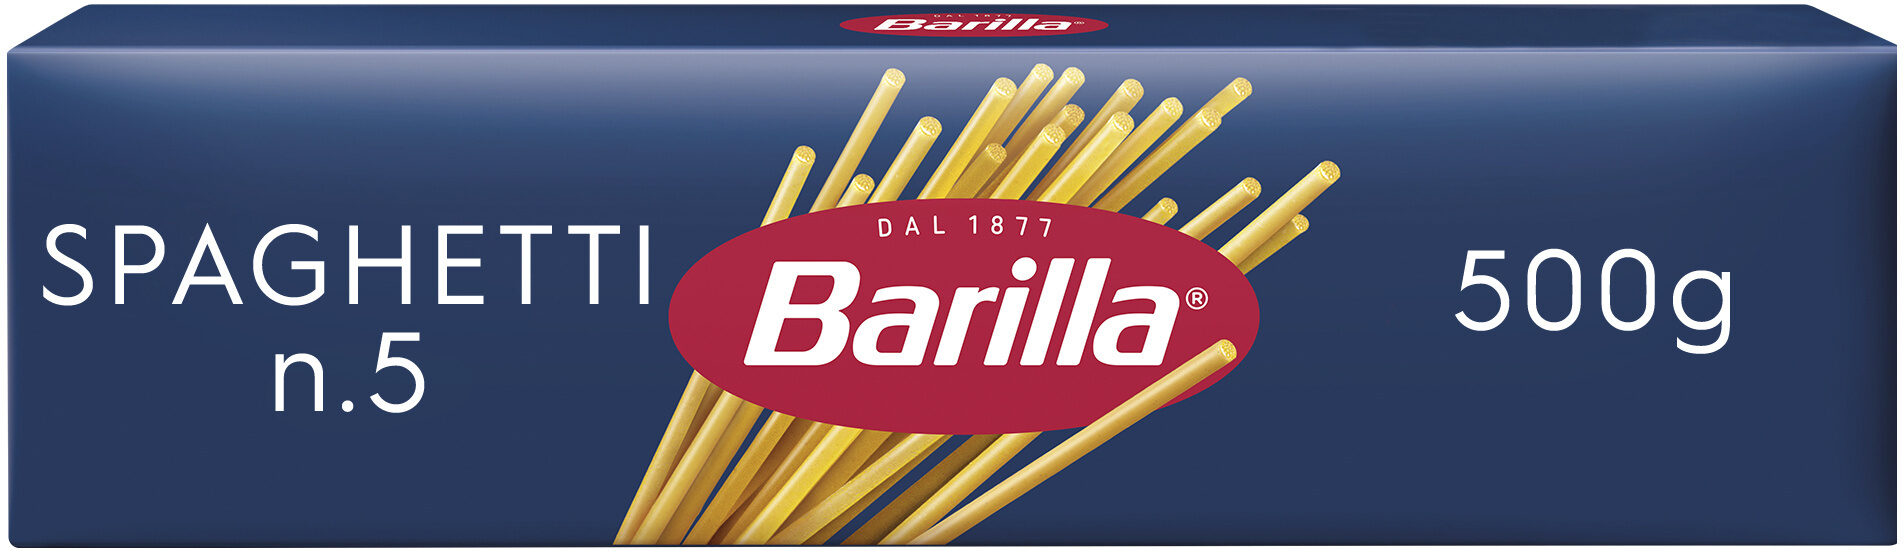 Barilla pates spaghetti n°5 500g - Produit